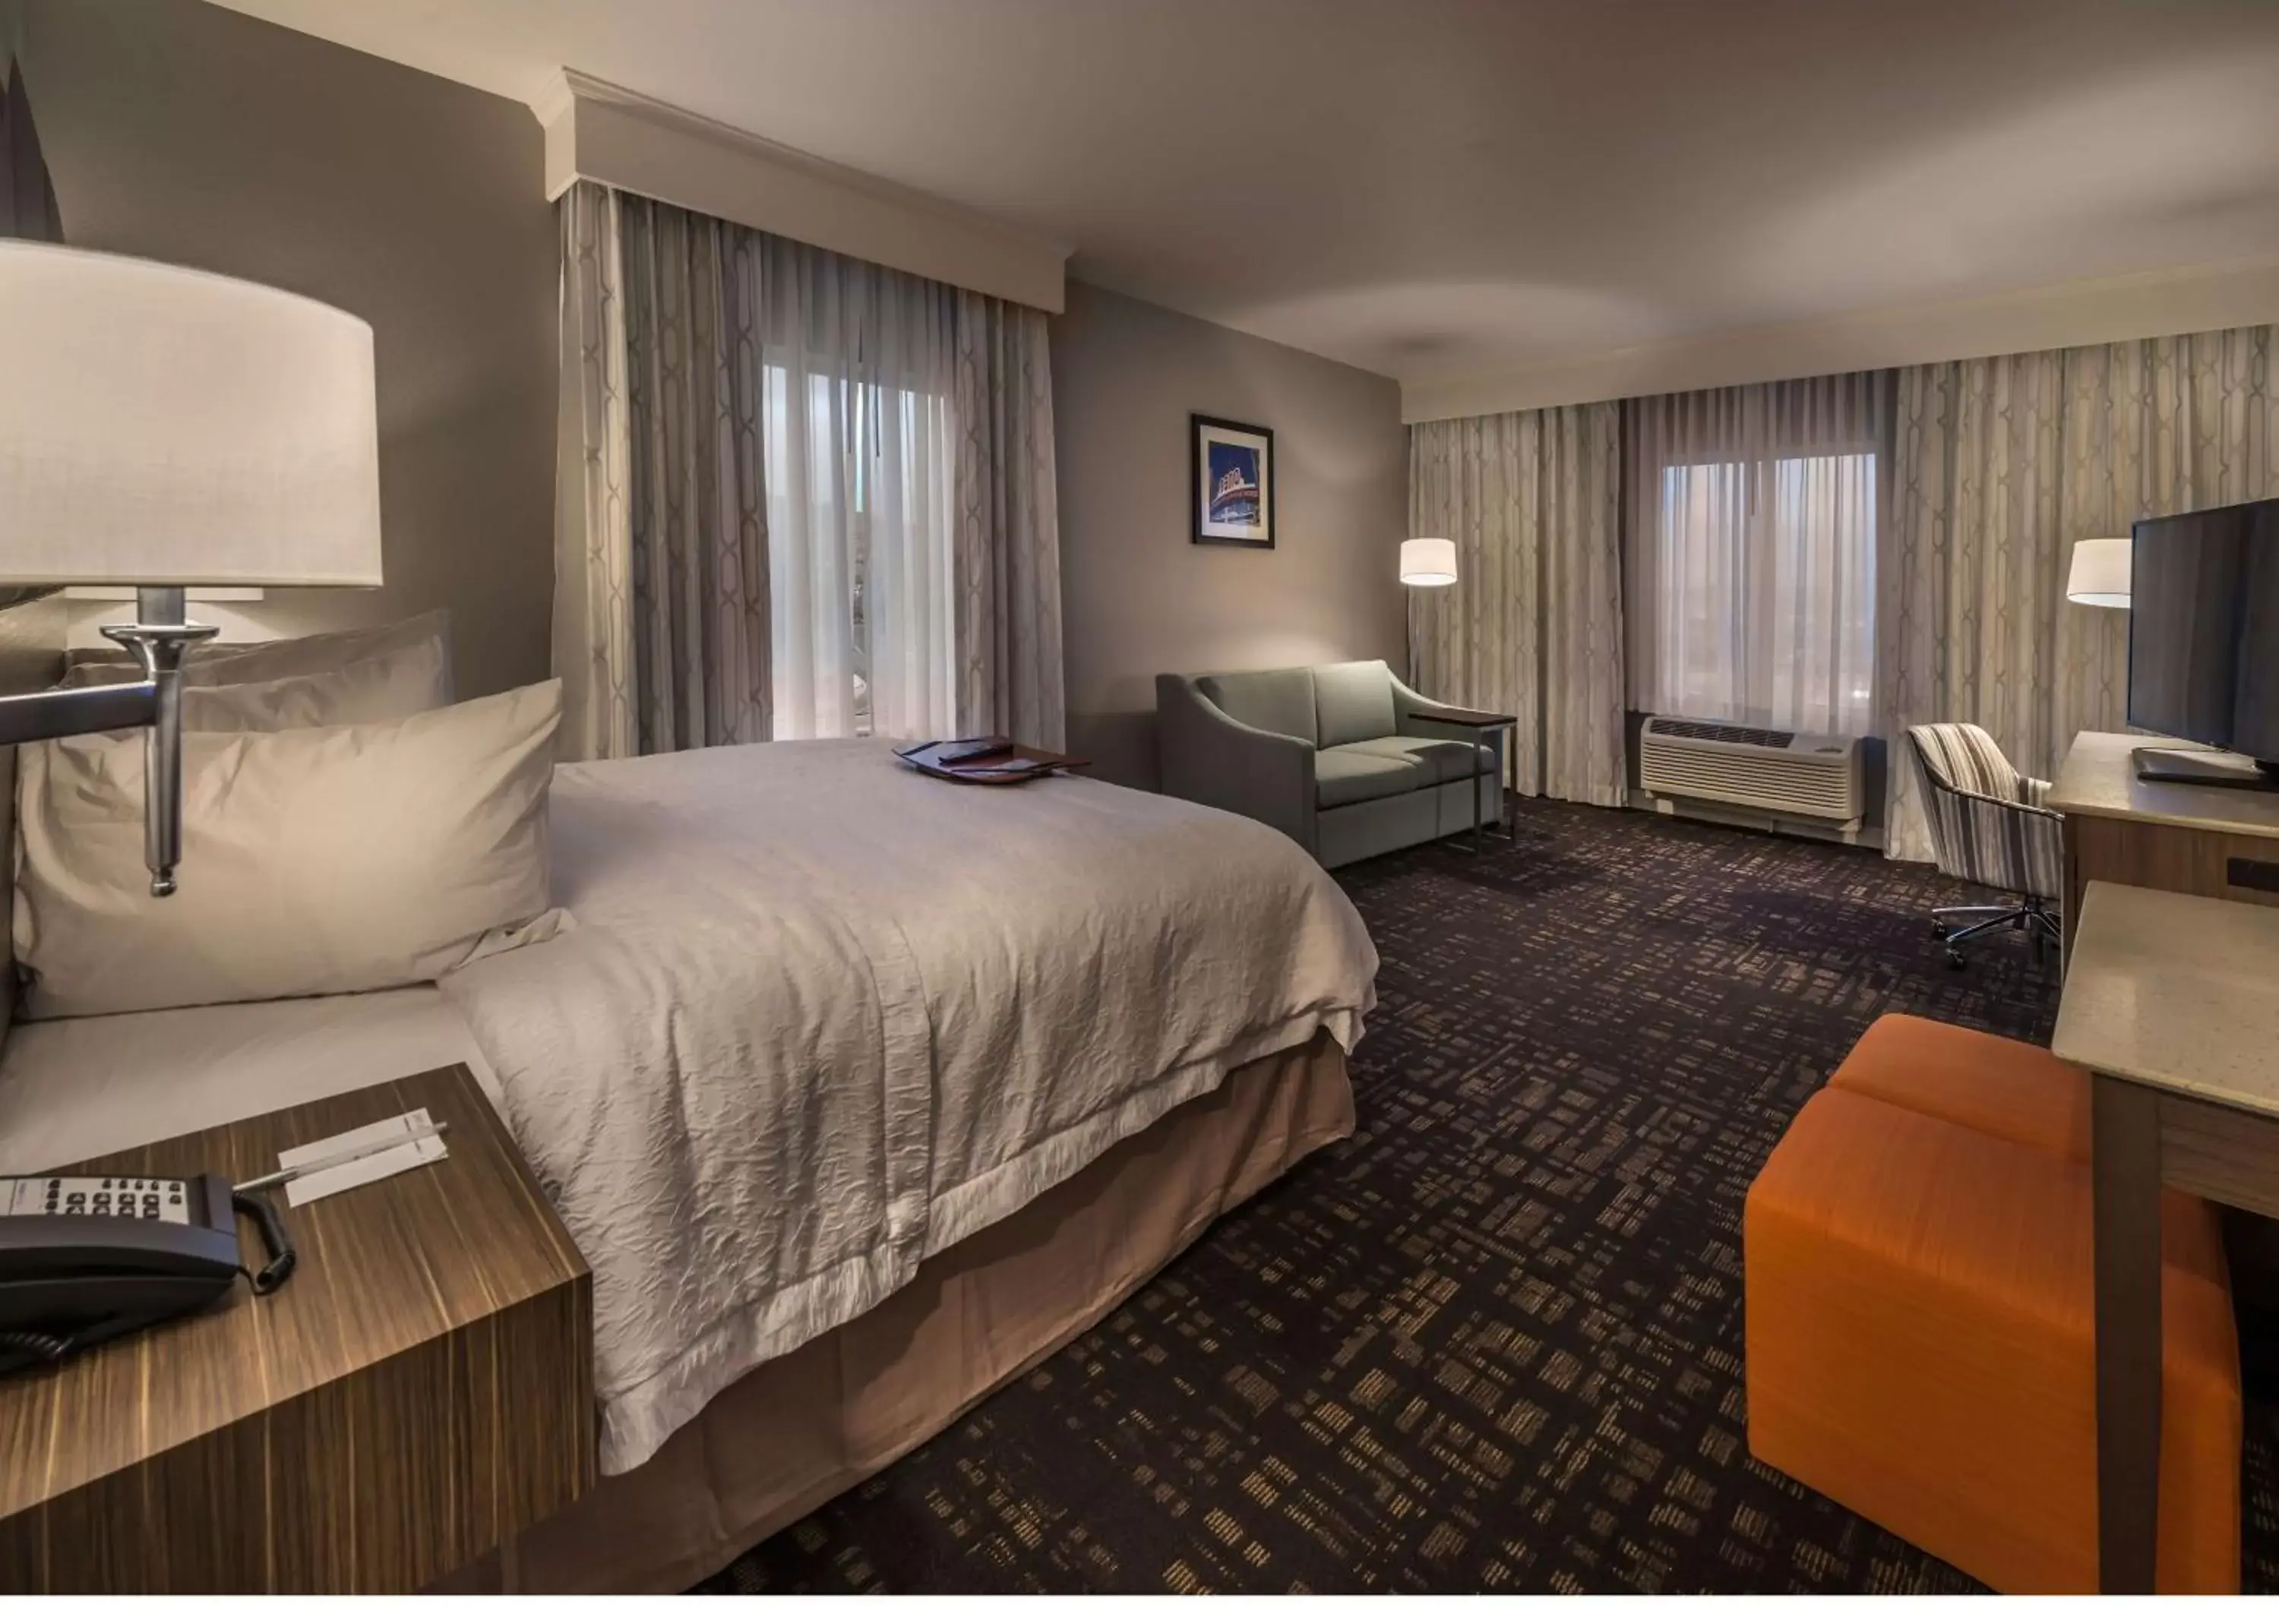 Bed in Hampton Inn & Suites - Reno West, NV